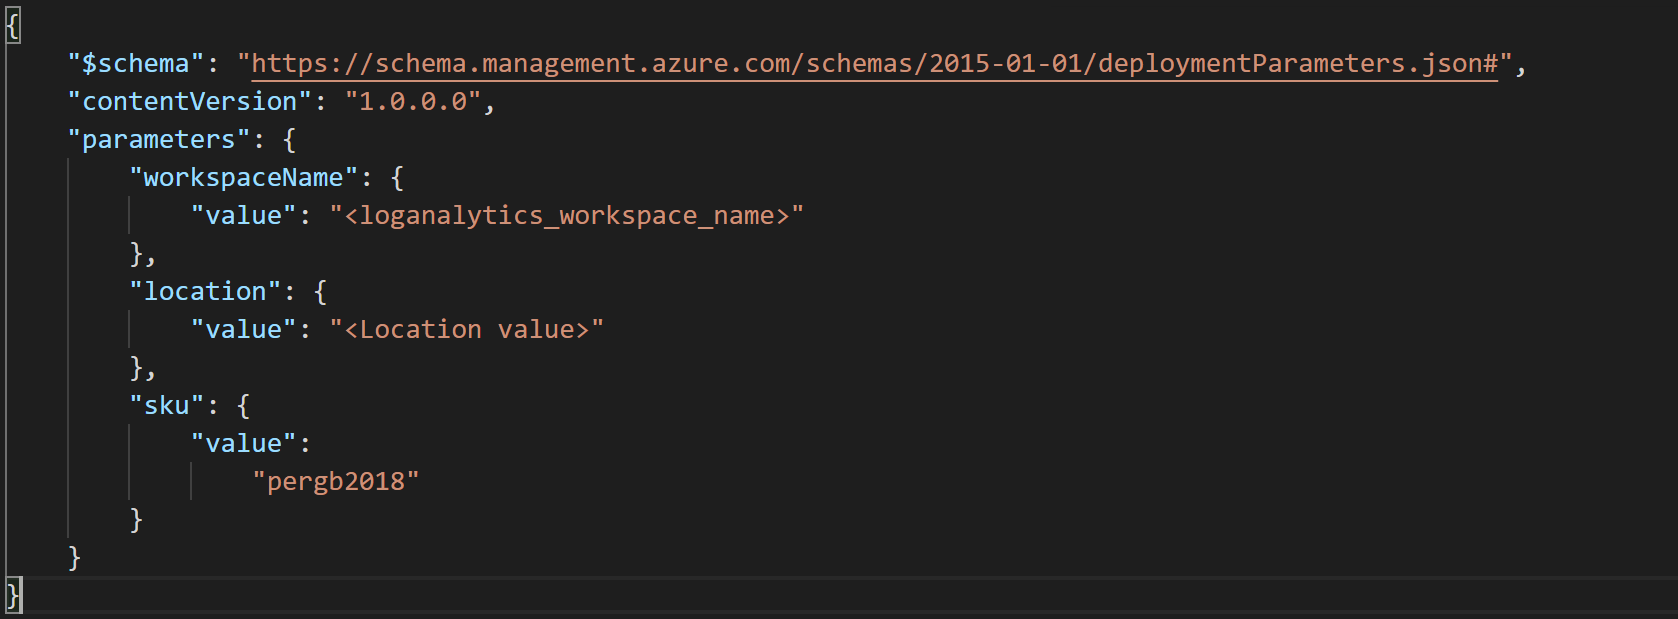 A screenshot of an ARM template parameters file.